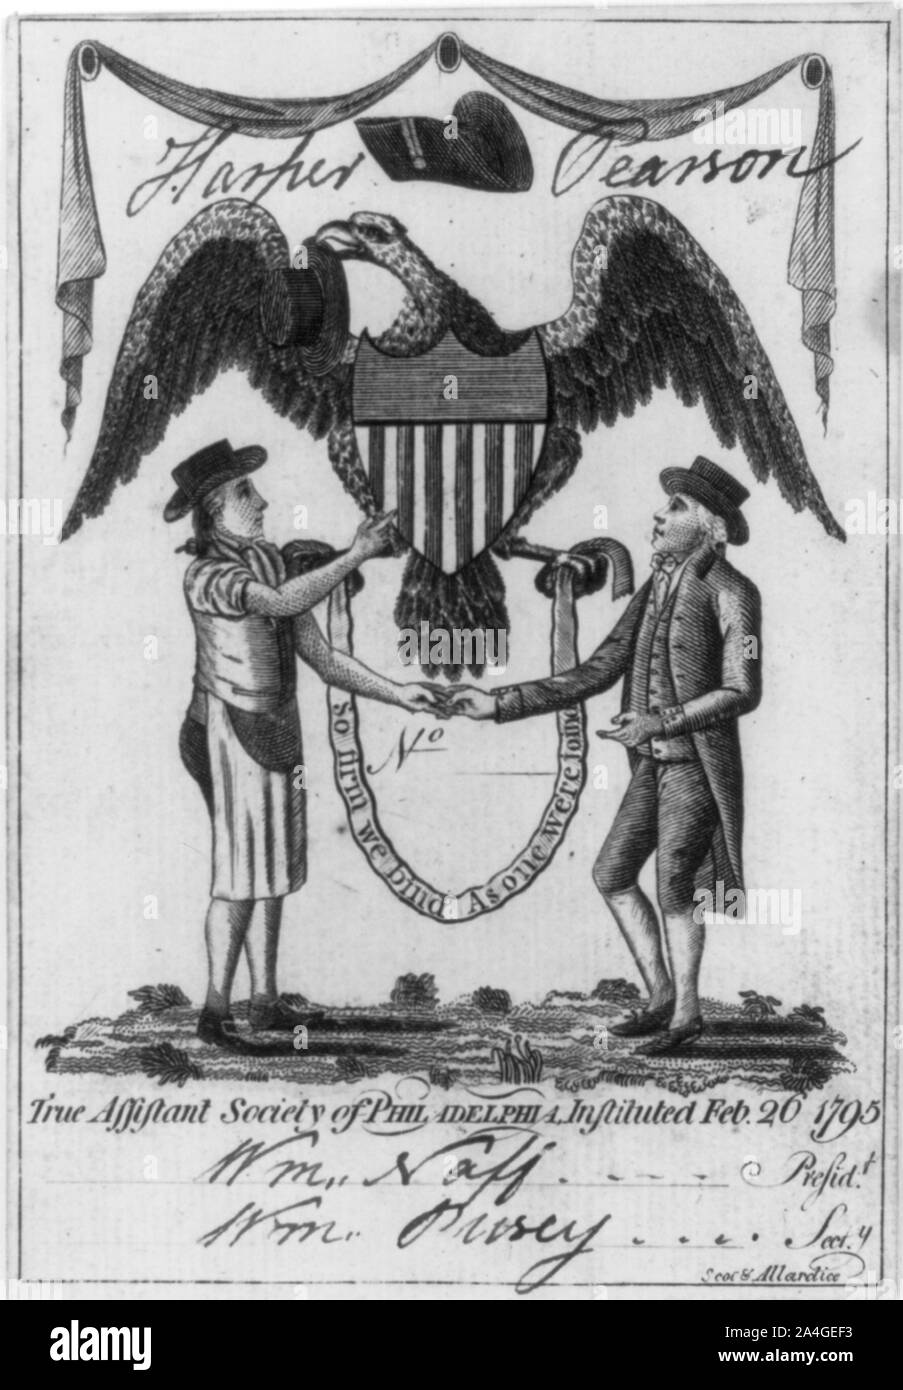 True Assistant Society of Philadelphia instituted Feb 26, 1795 Stock Photo